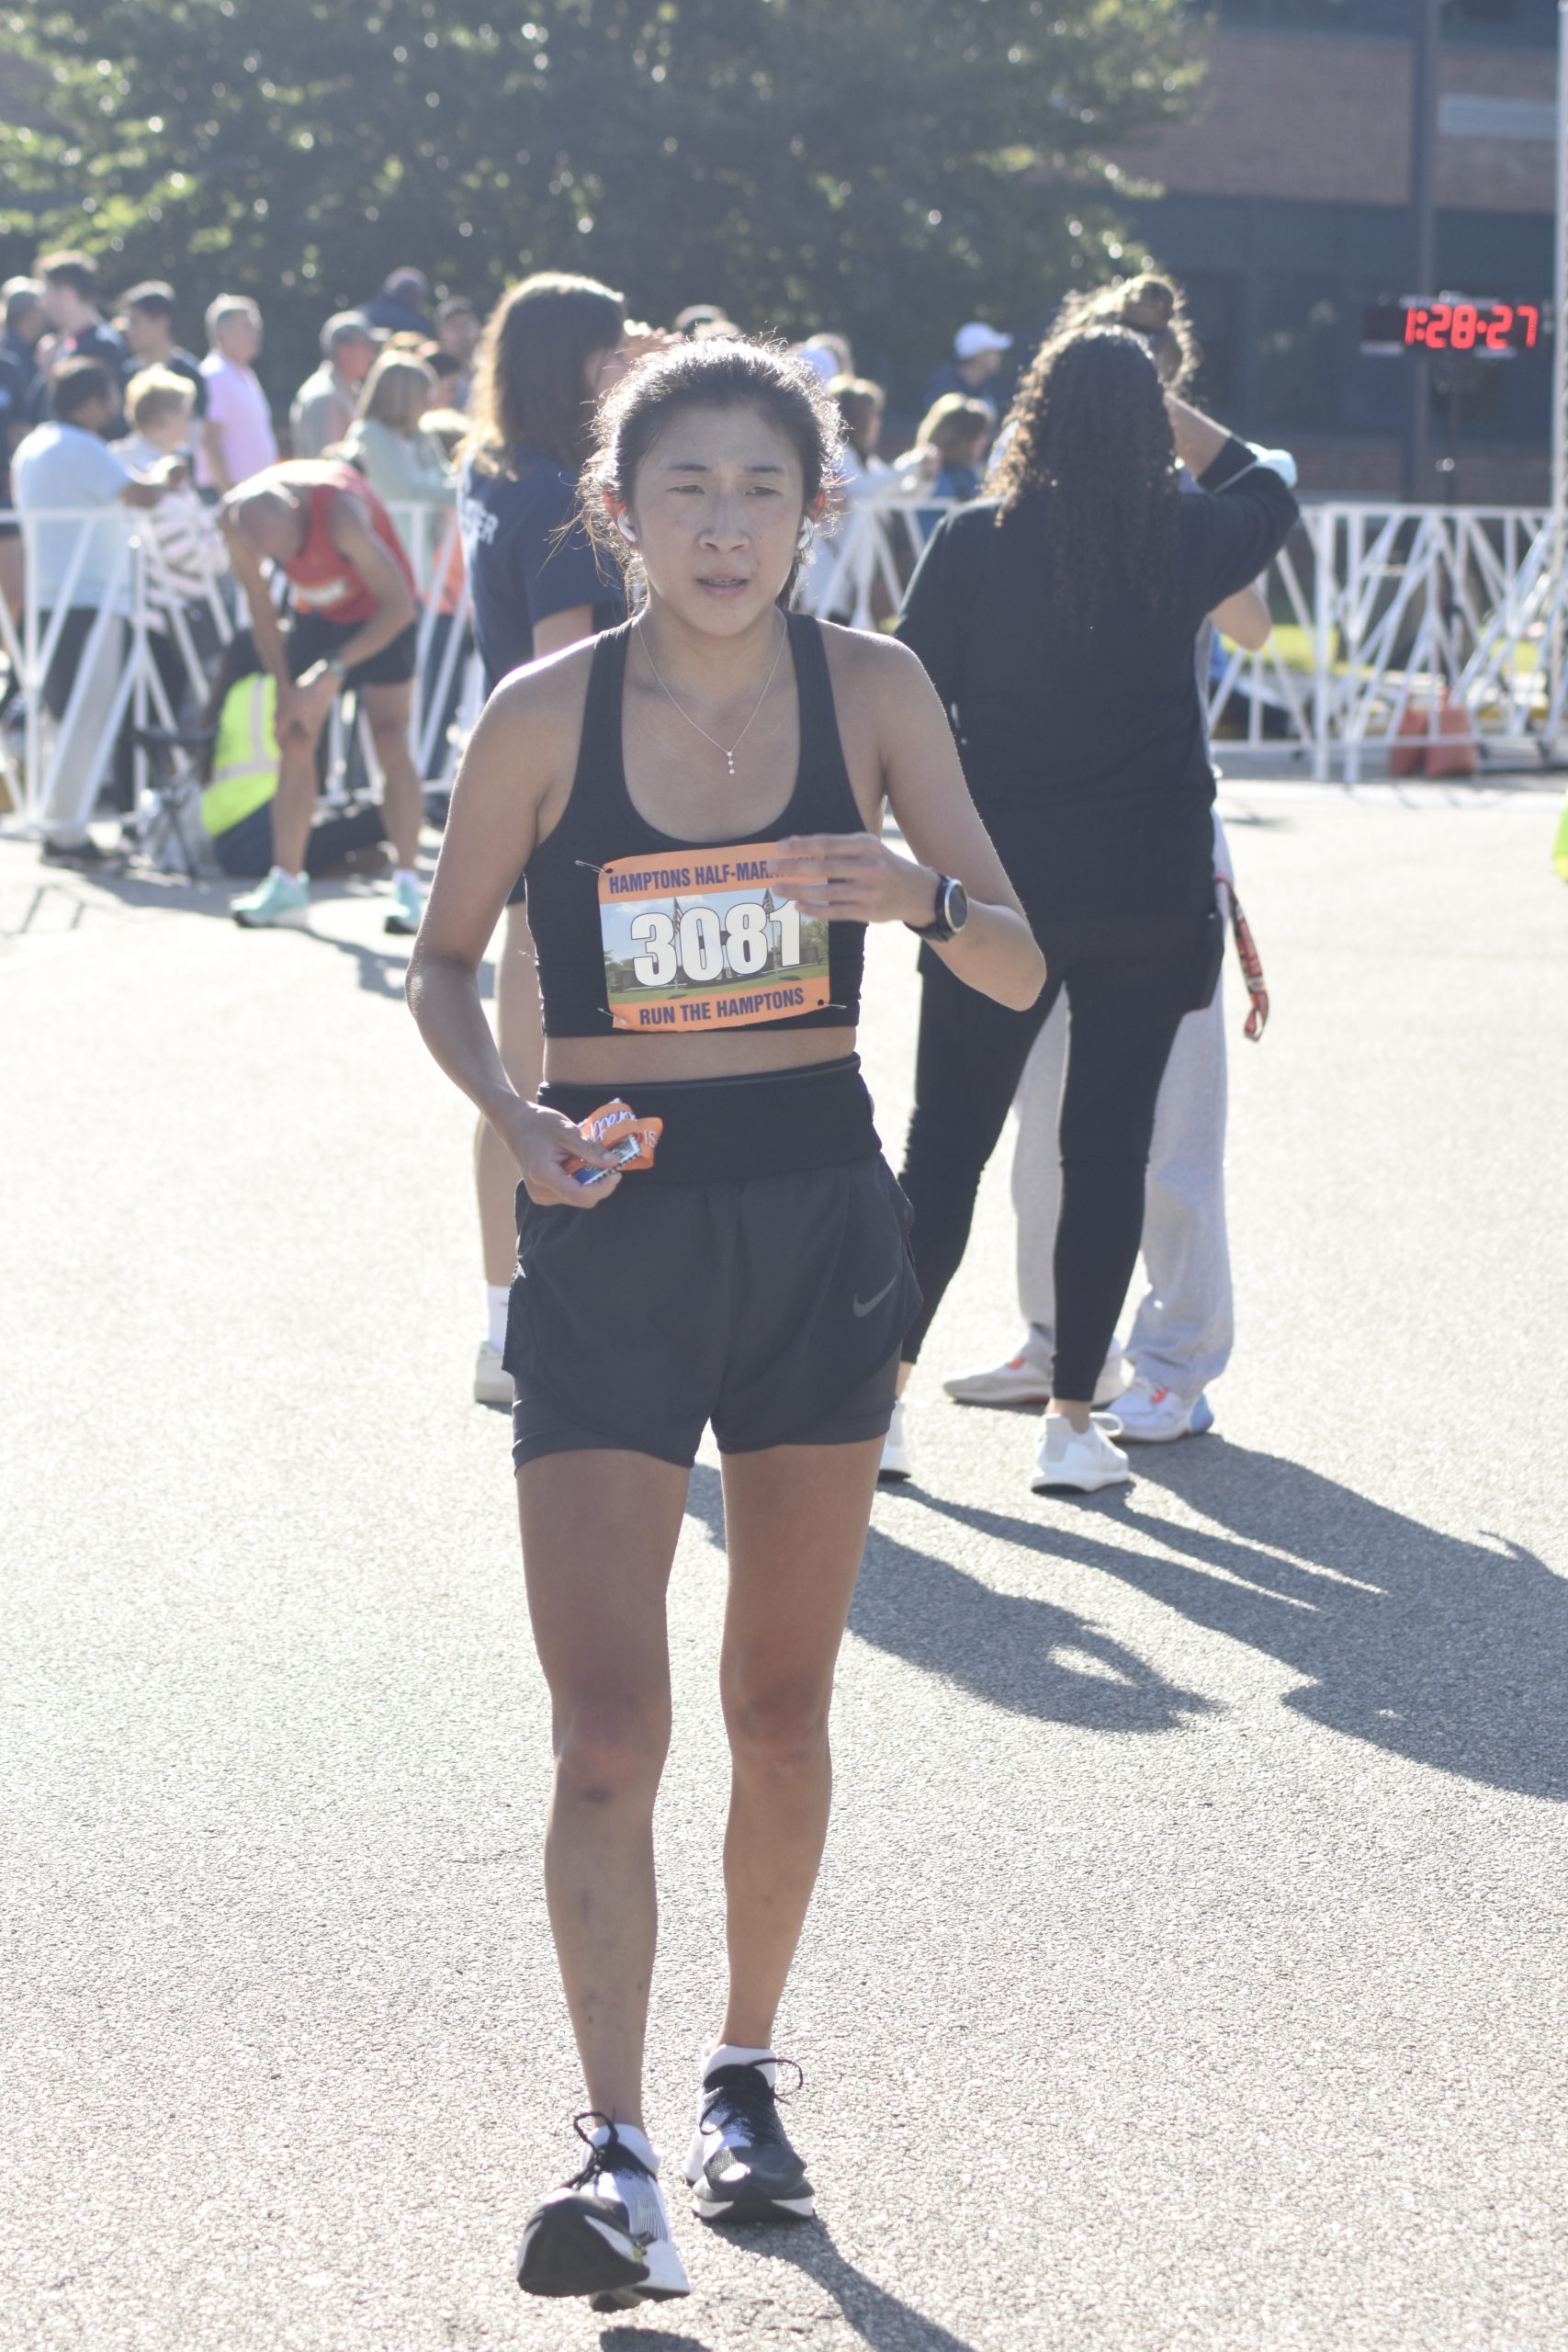 Katie Chu of Hillsborough, California, placed second among females in the Hamptons Half Marathon.